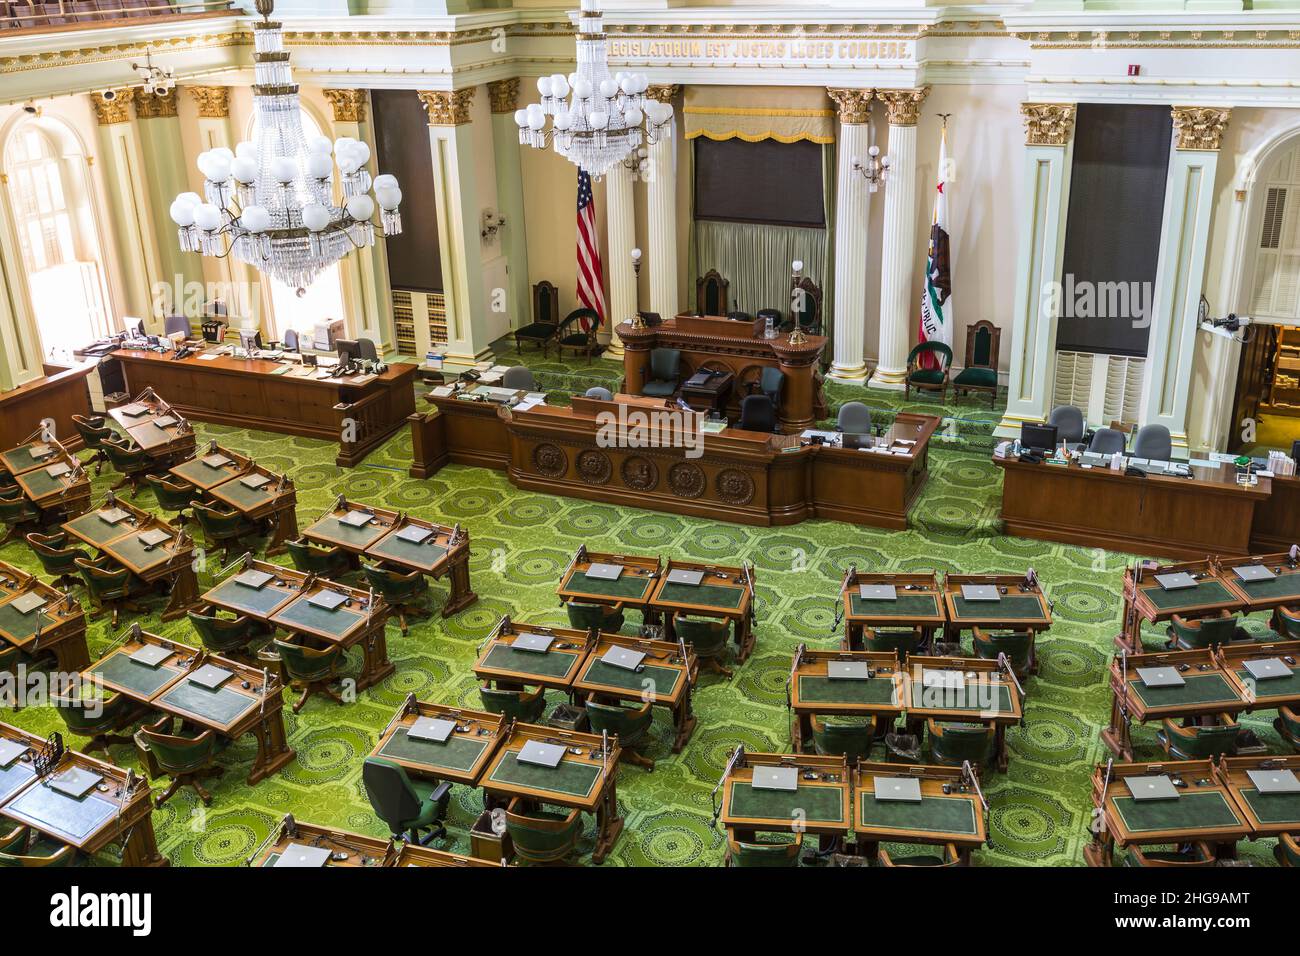 Sacramento, California, EE.UU. - 4 de julio de 2014: La sala de reuniones de la legislatura del capitolio del estado de California en Sacramento, California. Foto de stock